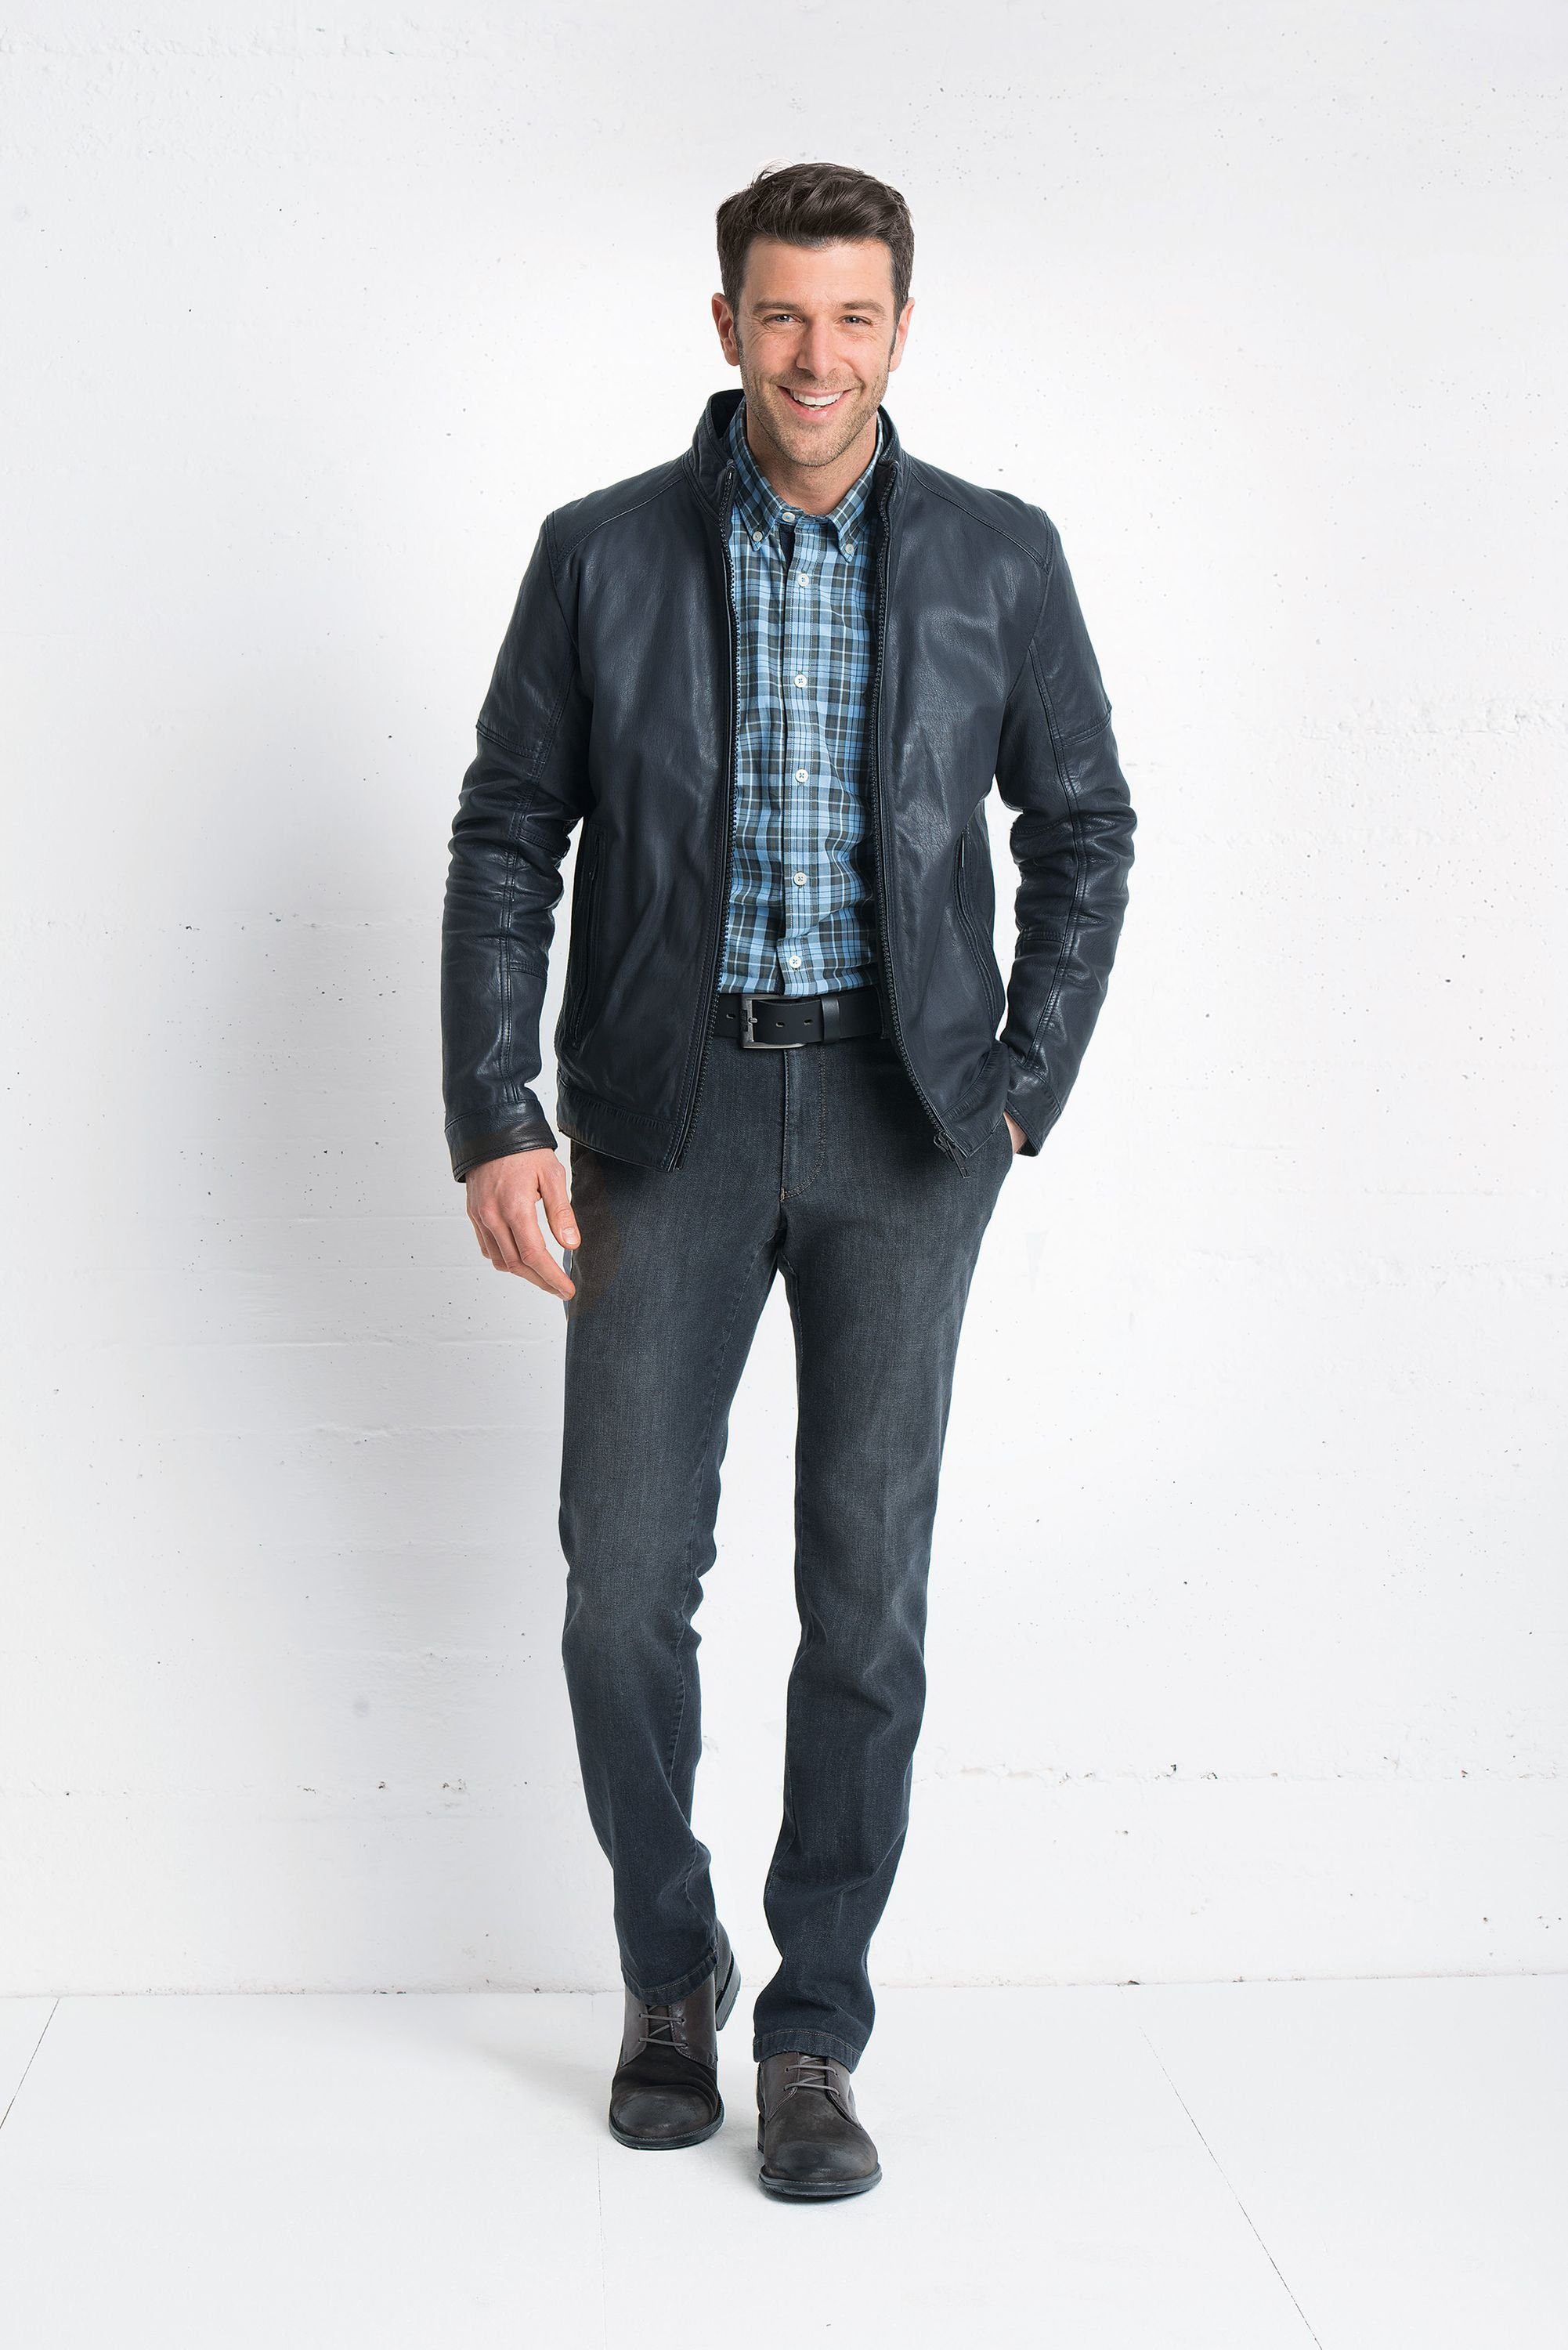 Hose Modell grey soft (53) Jeans aubi: Fit Herren used 526 Baumwolle Perfect Bequeme aubi High Flex Jeans aus Stretch